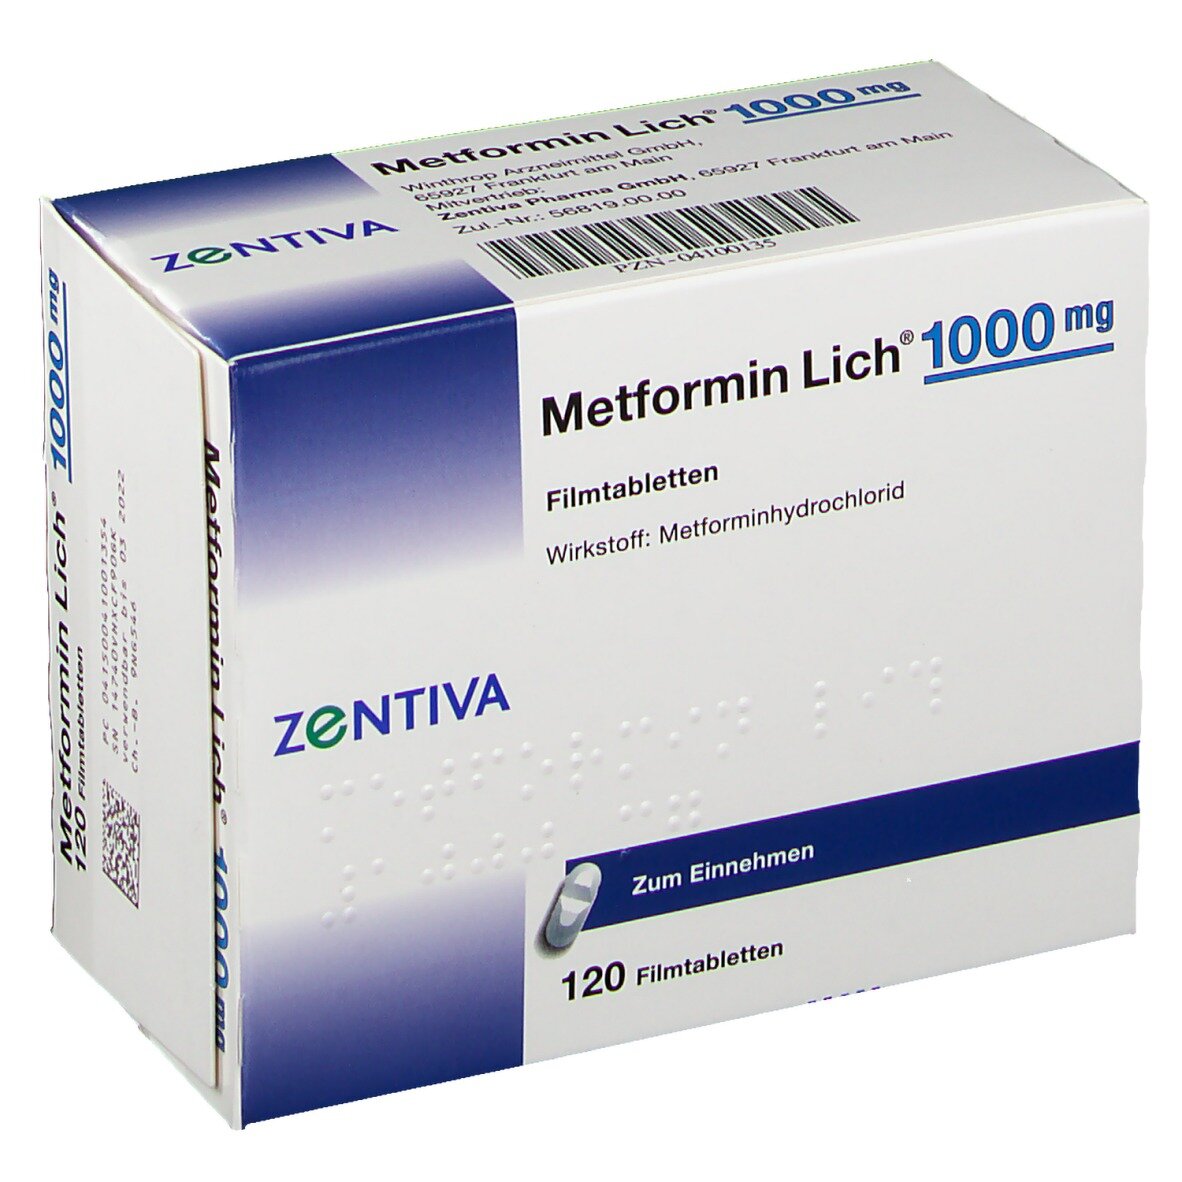 Метформин почему нельзя. Метформин 500. Метформин 500 мг синяя упаковка. Метформин 1000. Метформин 1000 мг.